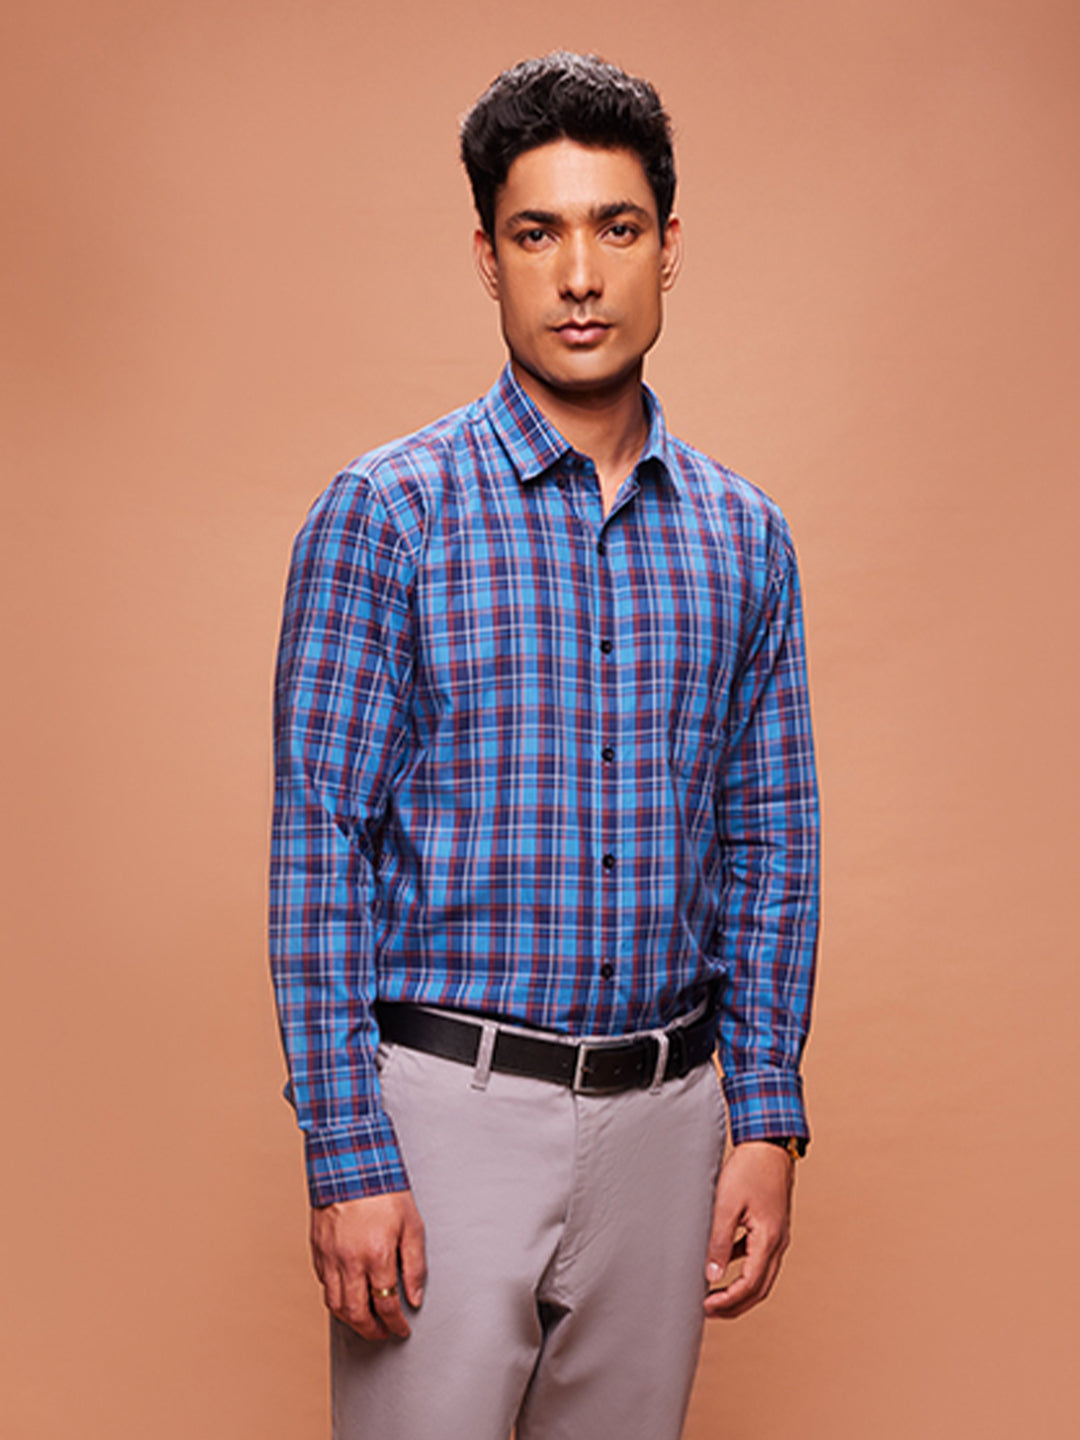 Bombay High Men's Premium Cotton Multicolored Checks Shirt